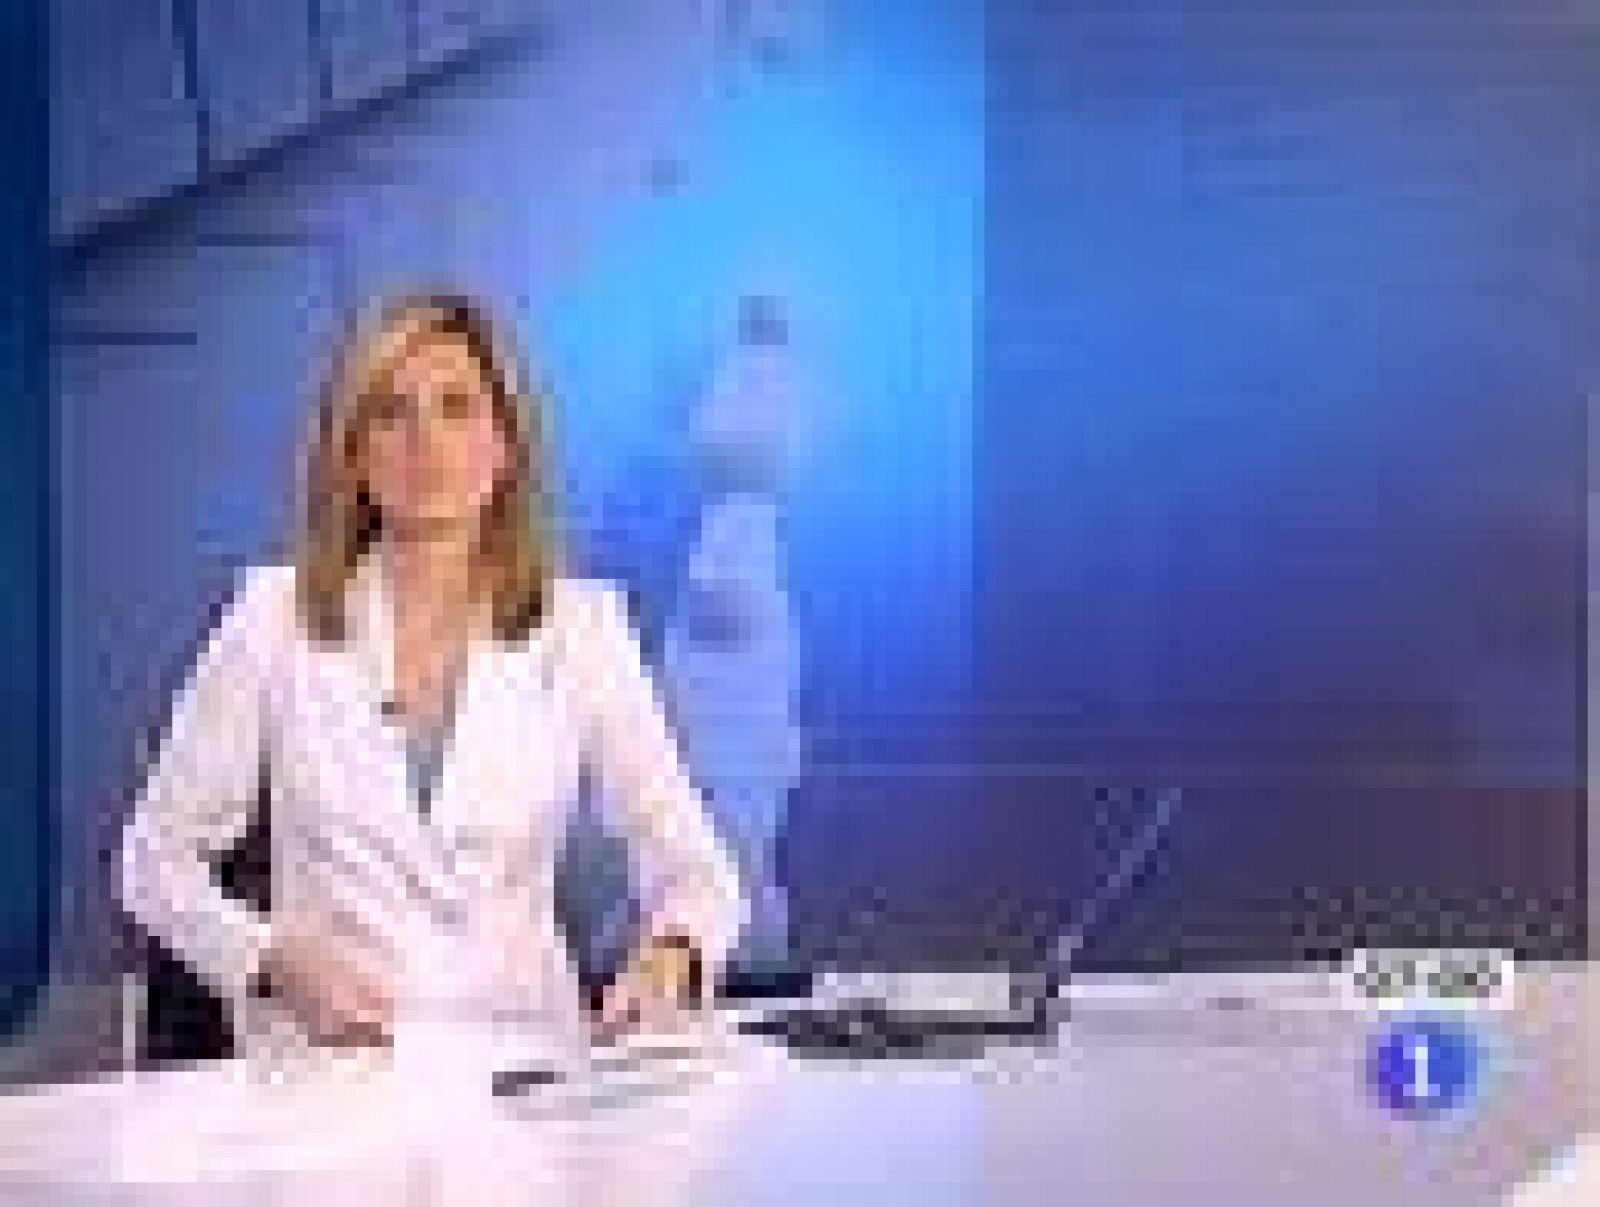 Telediario 1: Telediario Matinal en 4' - 14/11/11 | RTVE Play